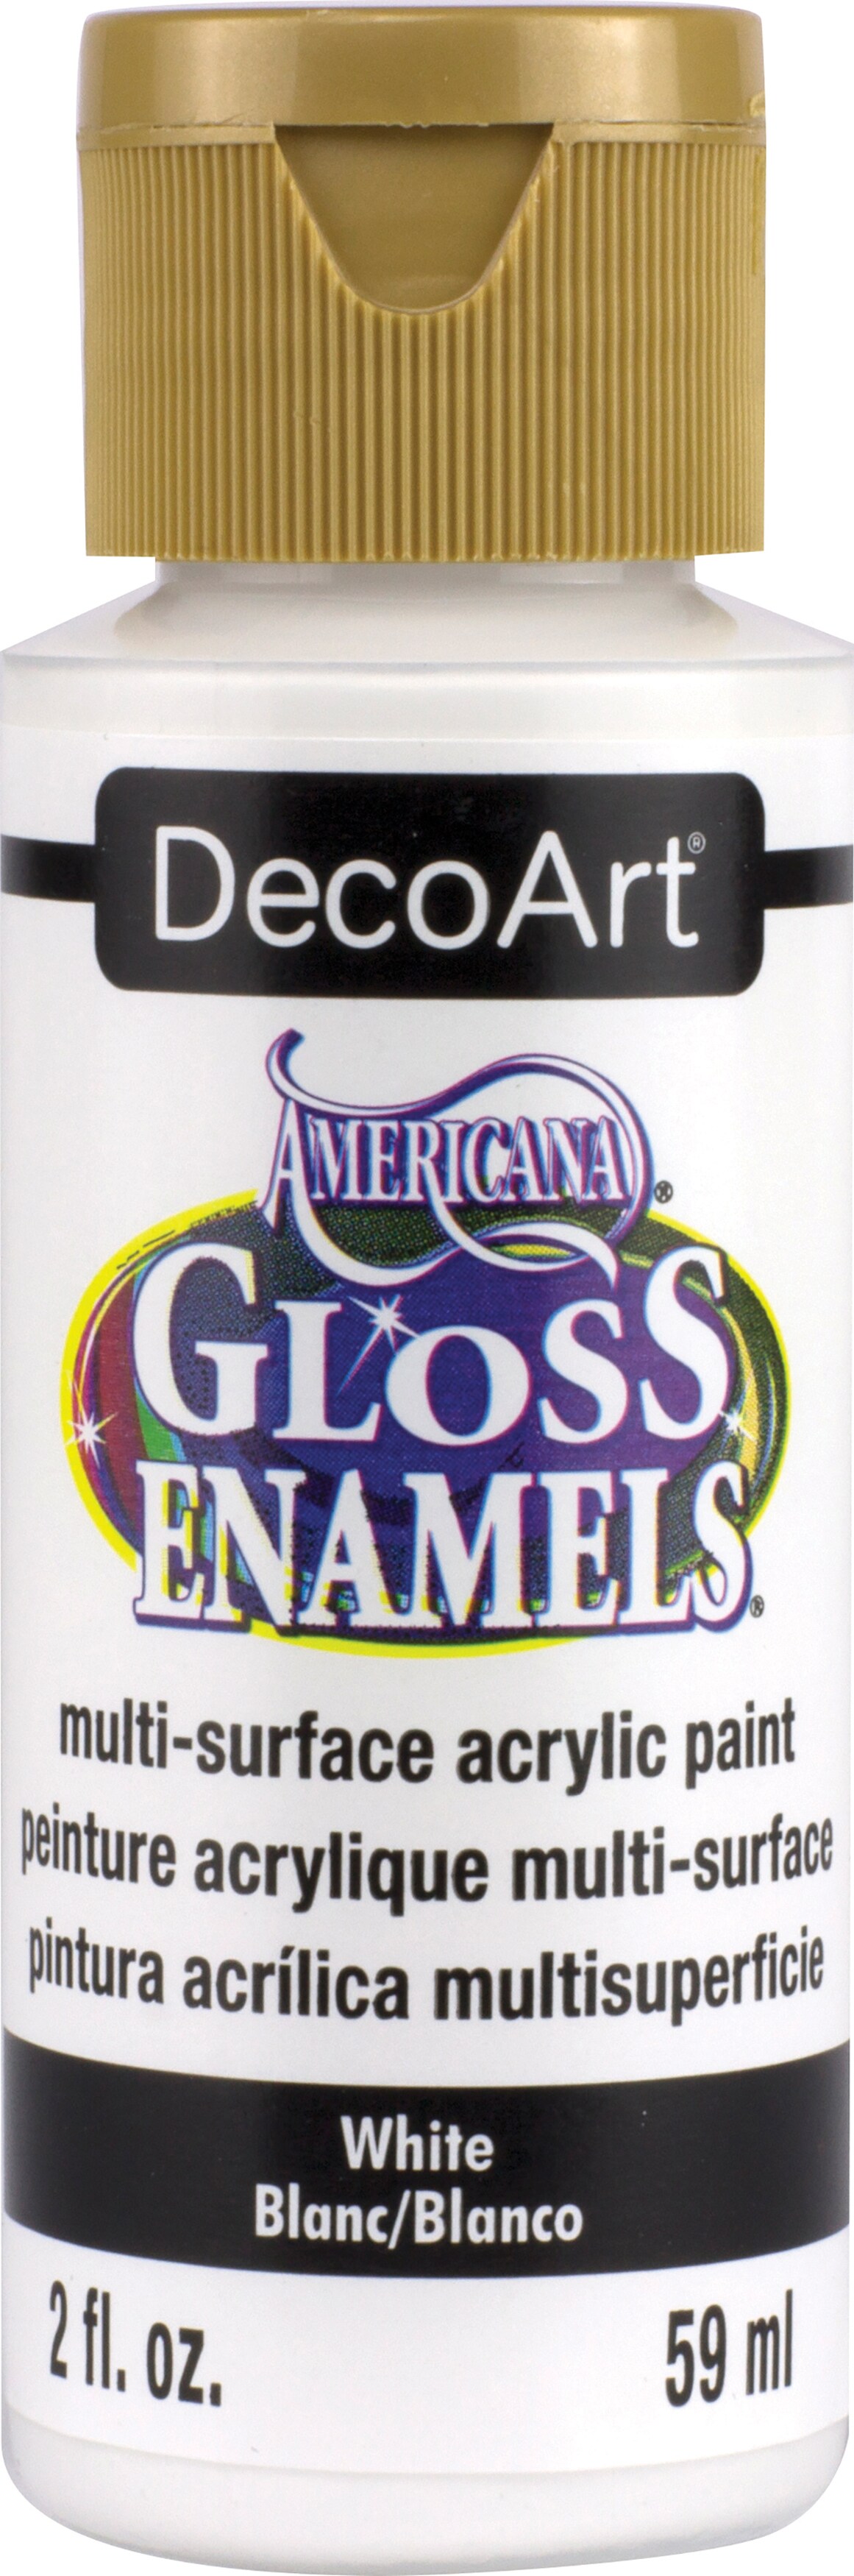 DecoArt Americana Gloss Enamels Acrylic Paint 2oz-White